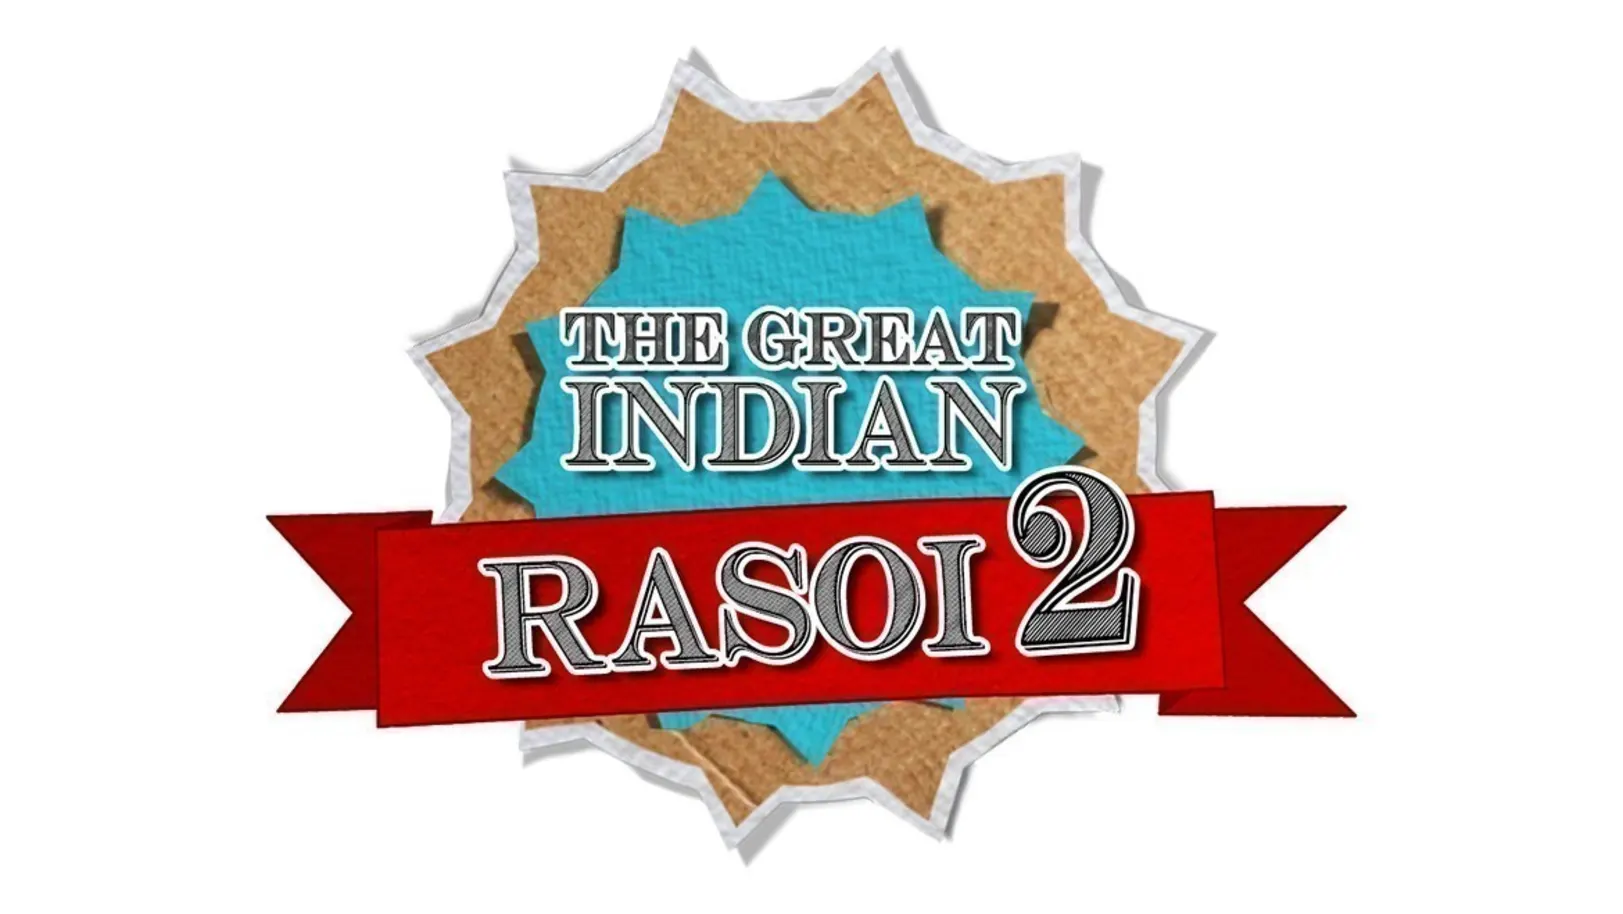 The Great Indian Rasoi Season 2 TV Show